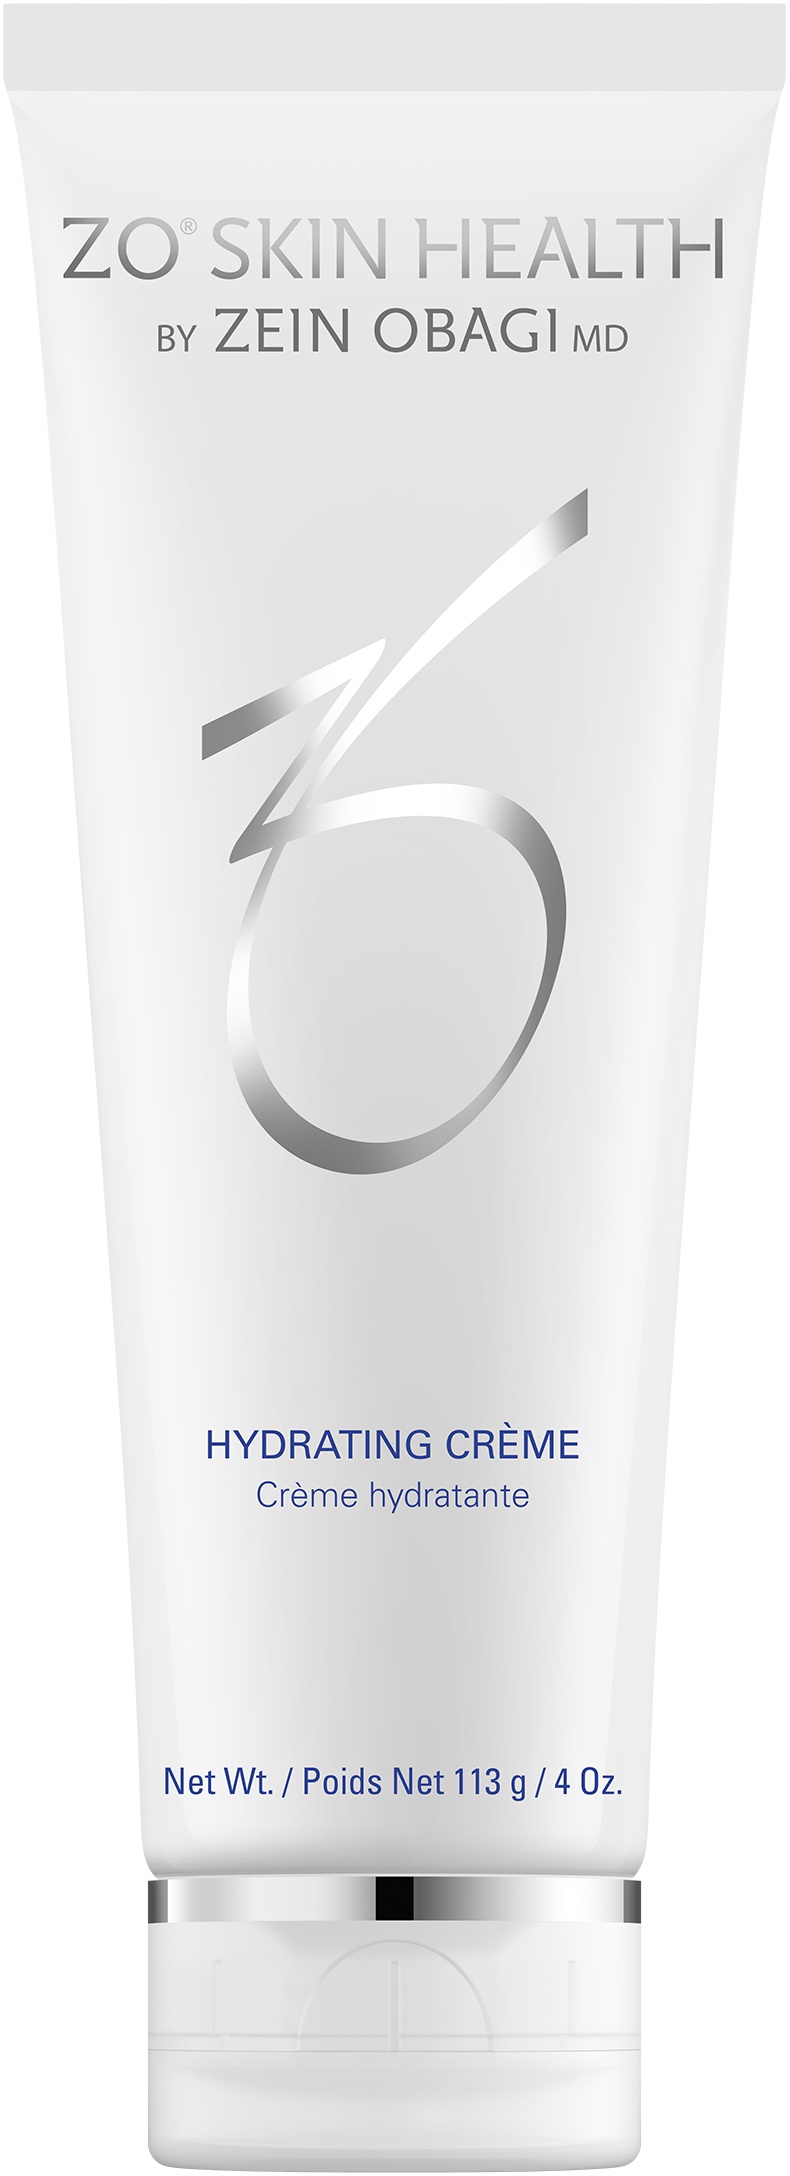 Zo skin health Hydrating Creme